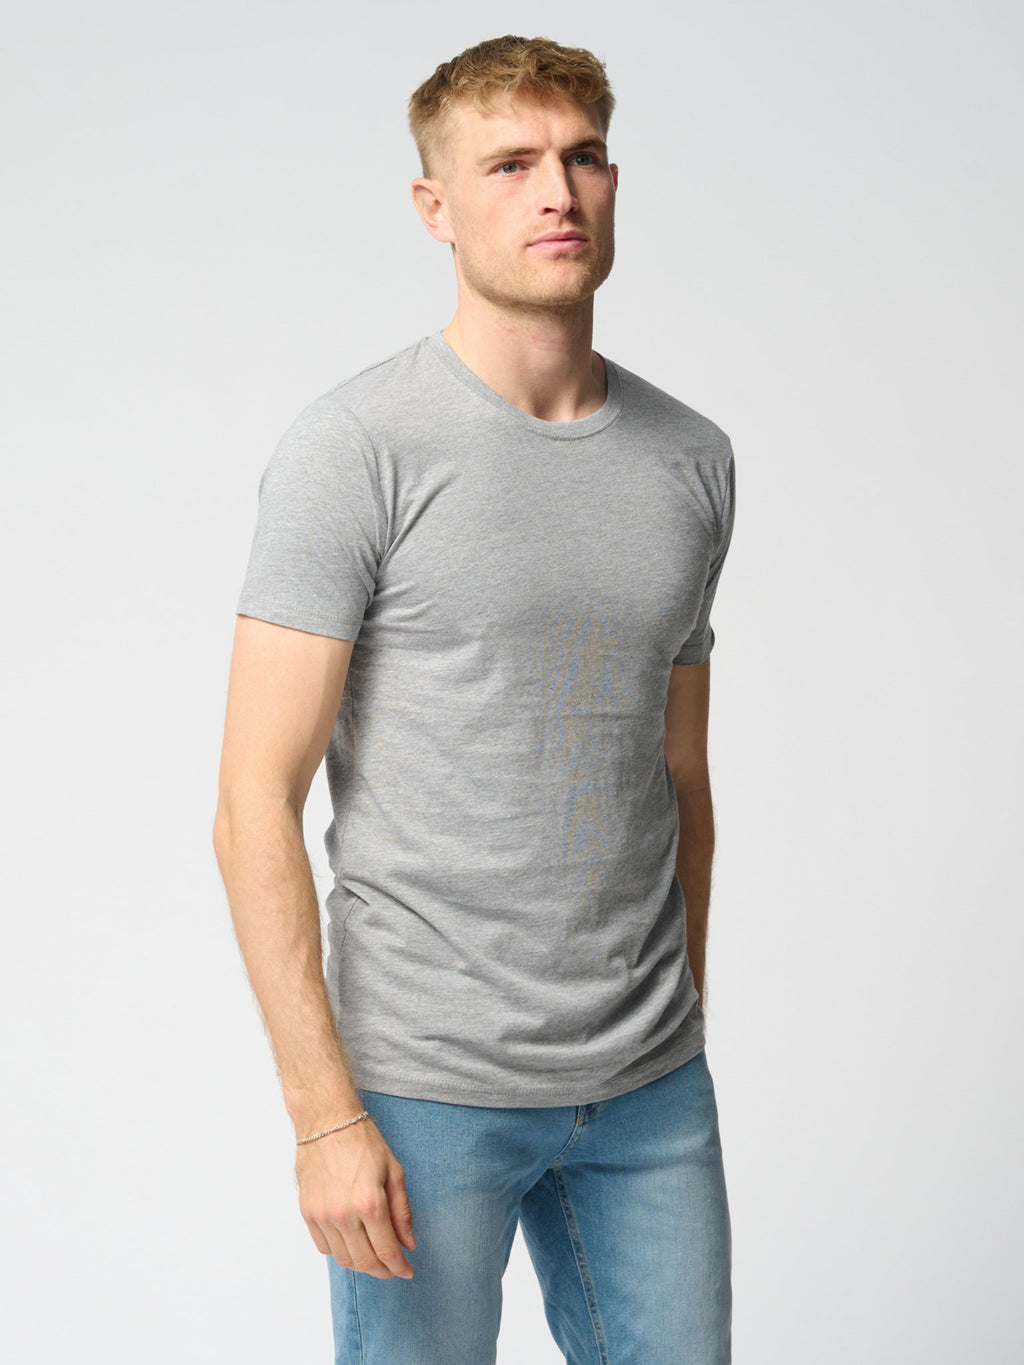 T-shirt musculaire - gris clair